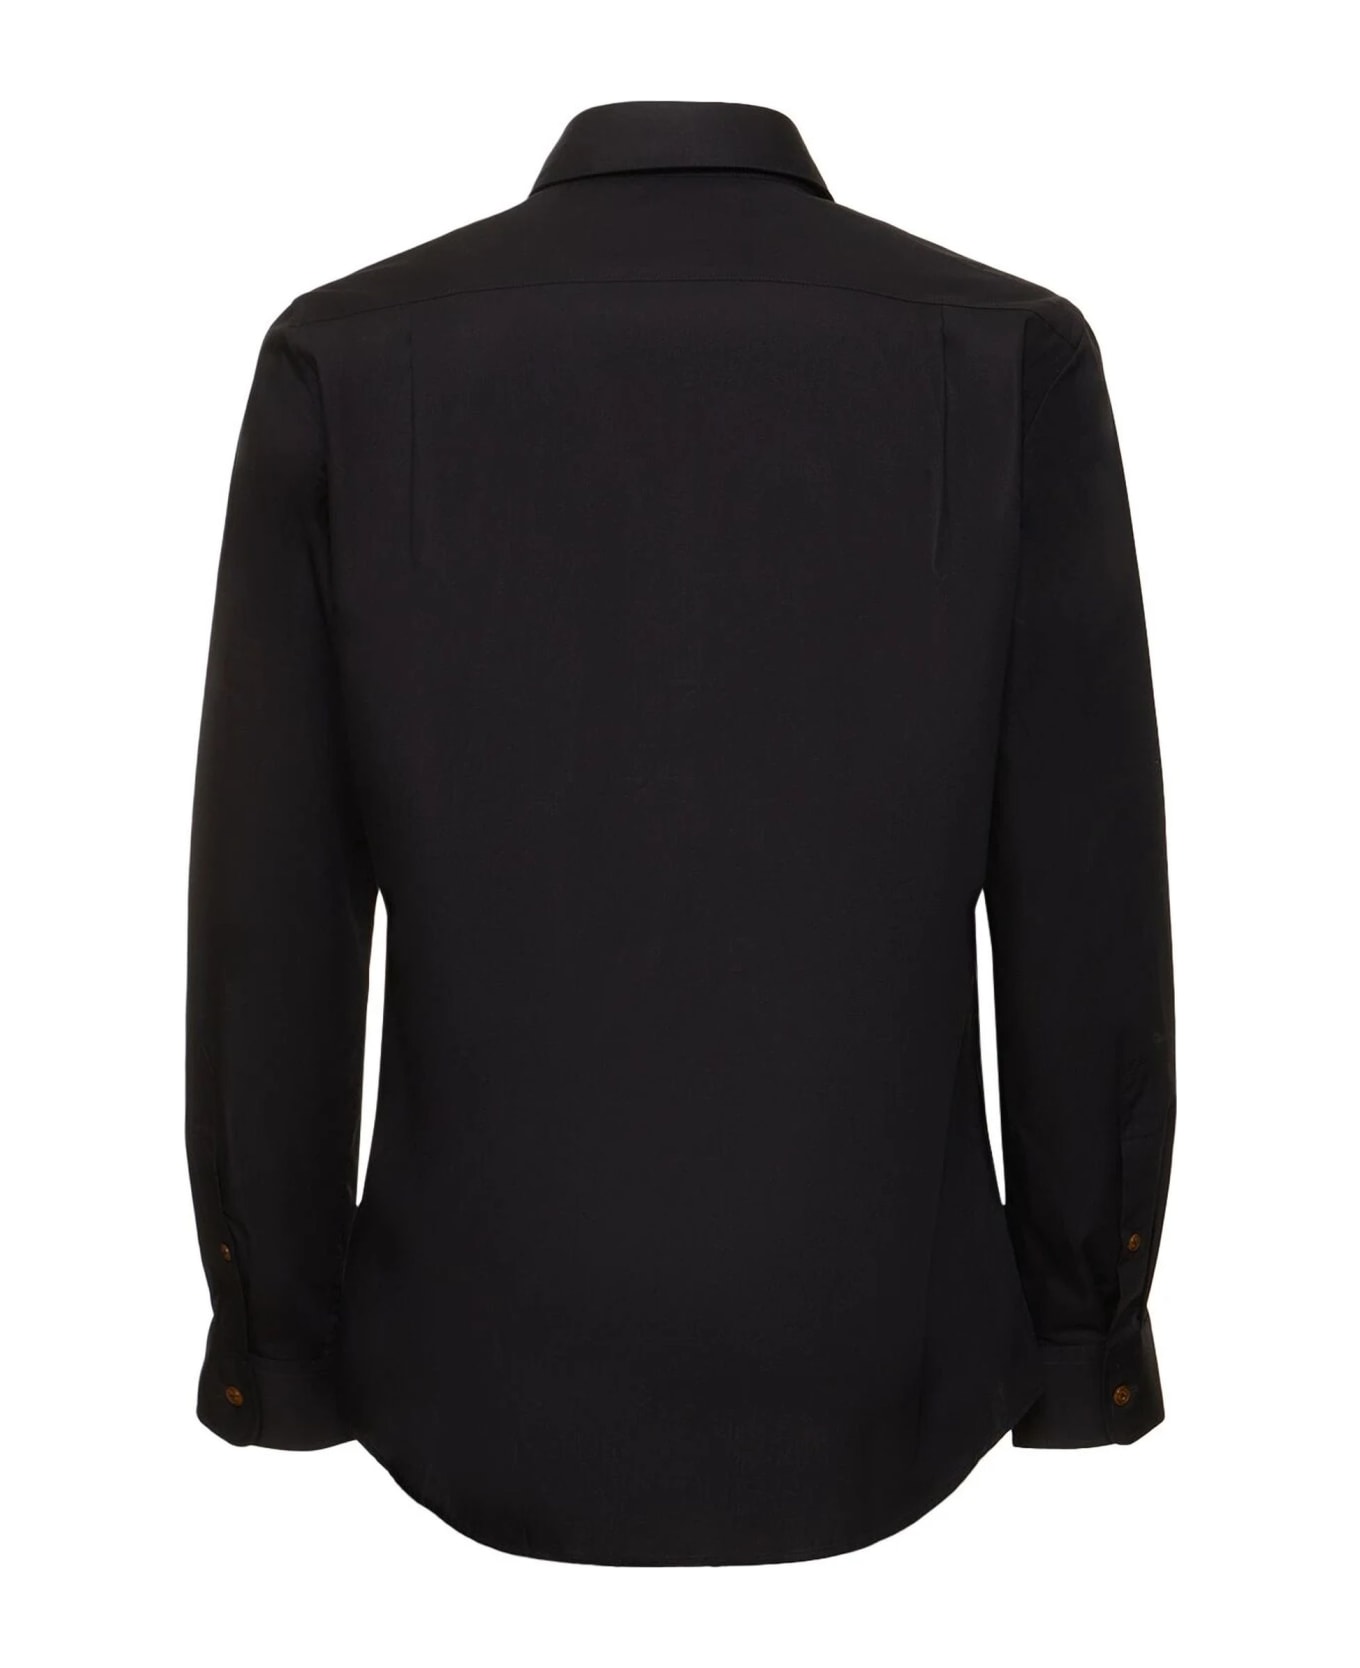 Vivienne Westwood Shirts Black - Black シャツ